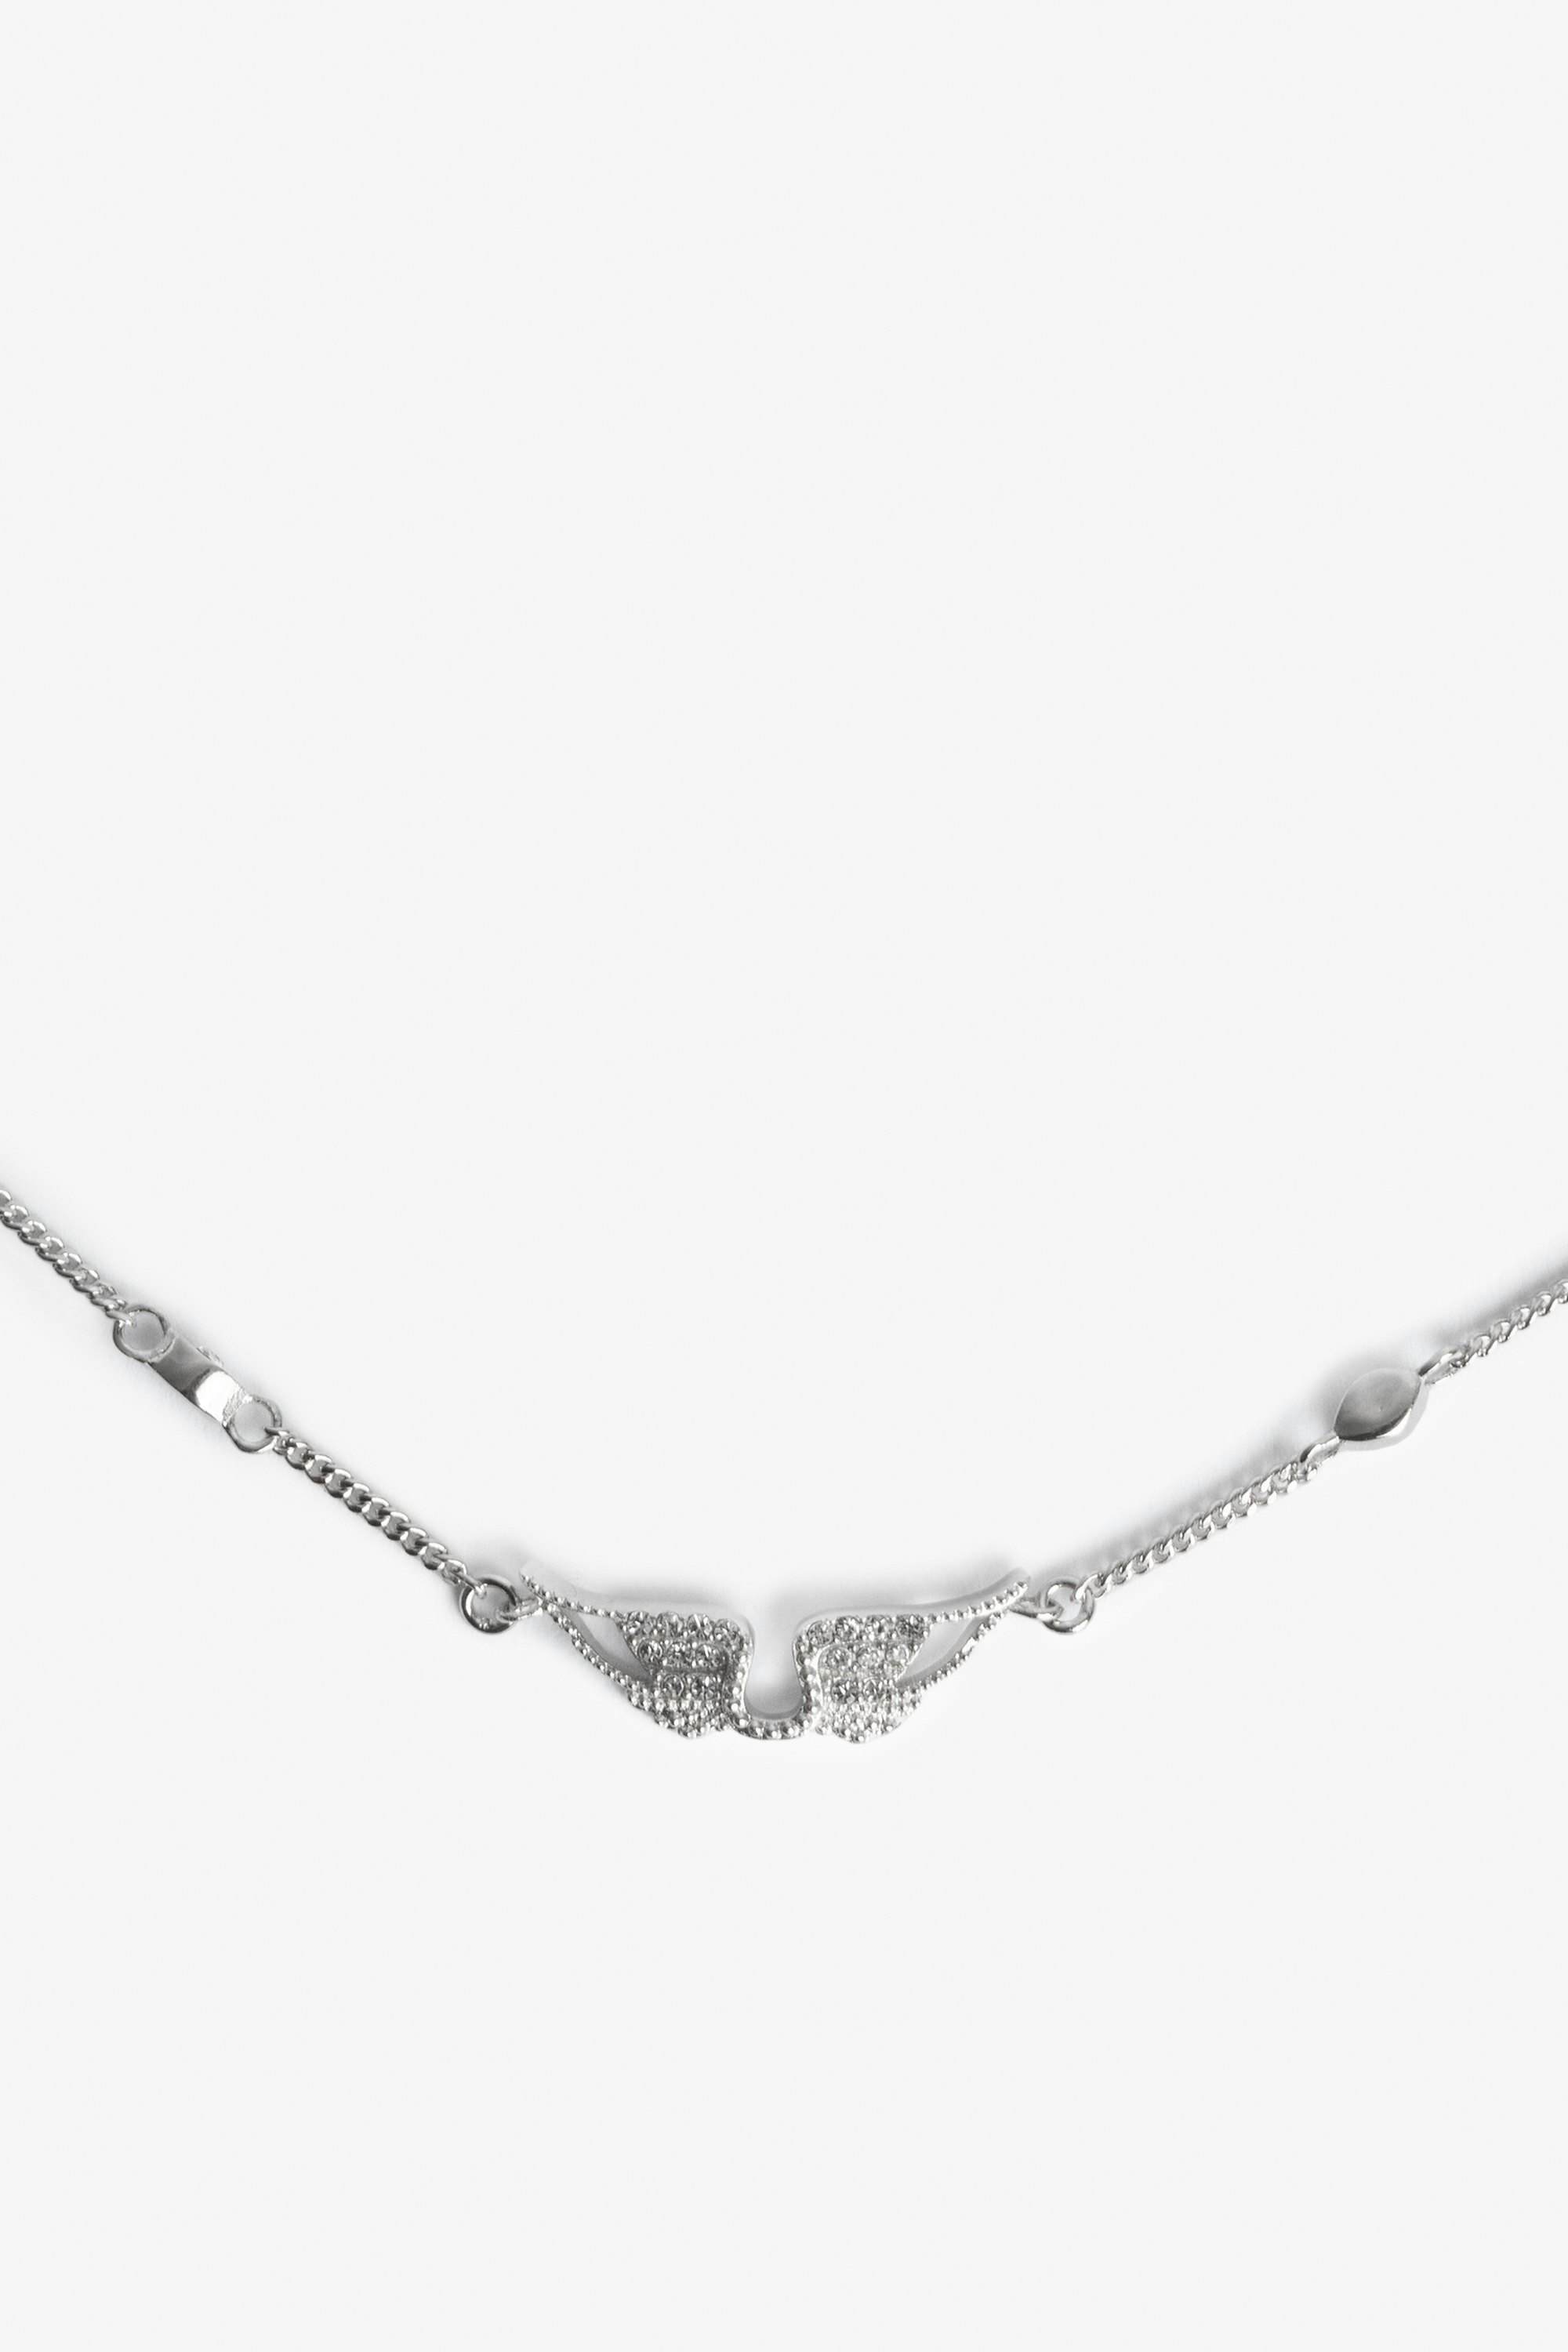 Rock Choker Necklace - Brass and black rhinestone necklace.